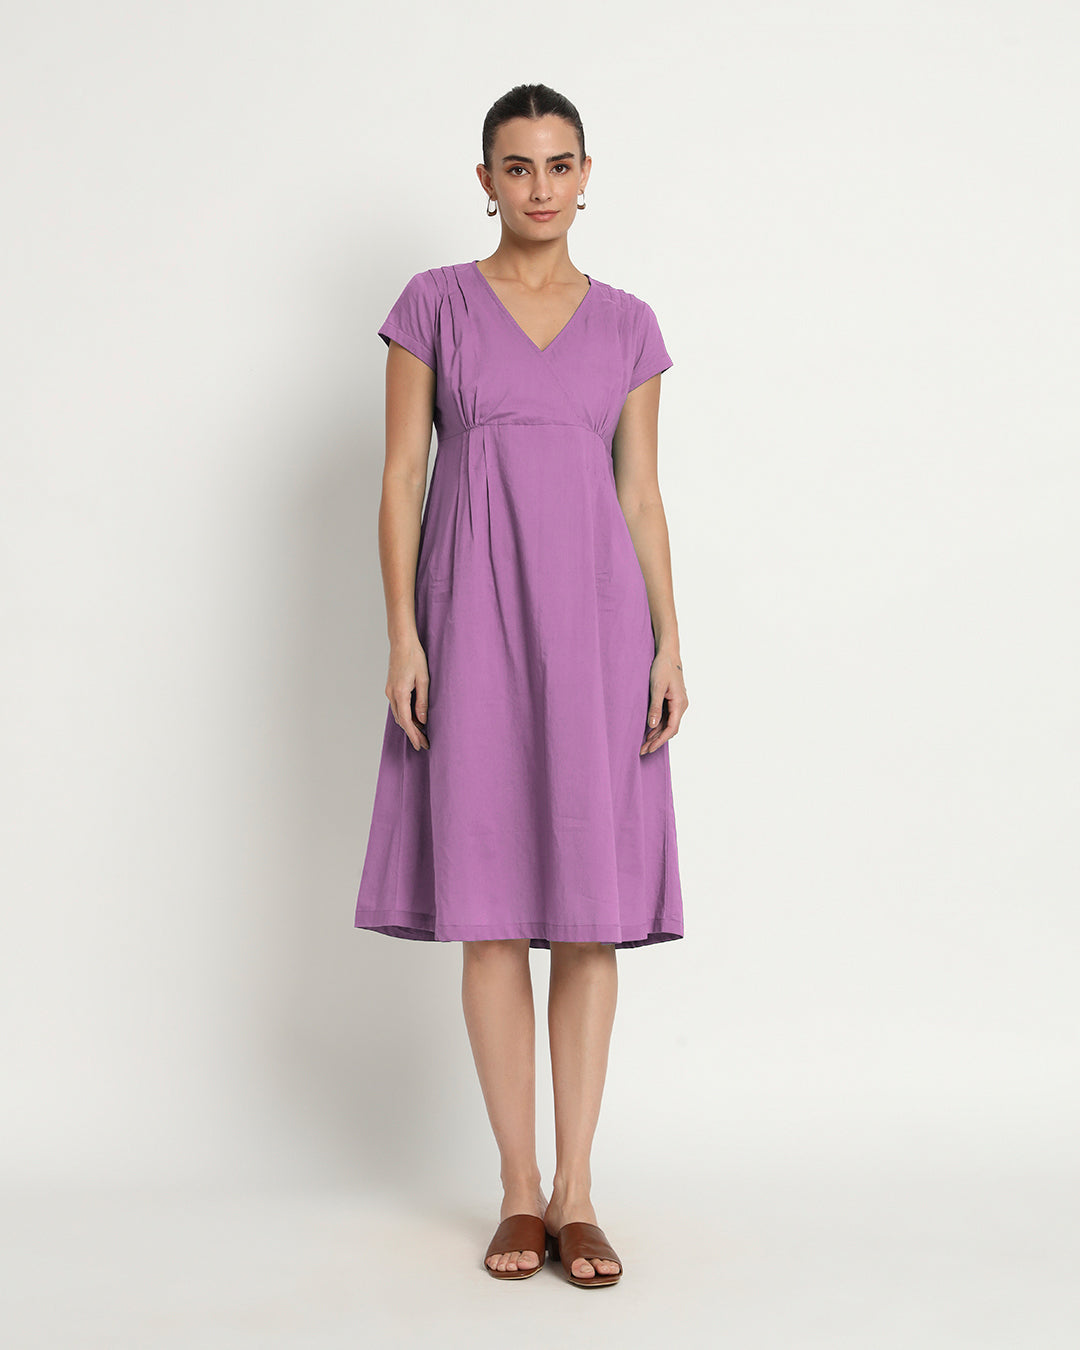 Wisteria Purple Voguish Verve V Neck Dress